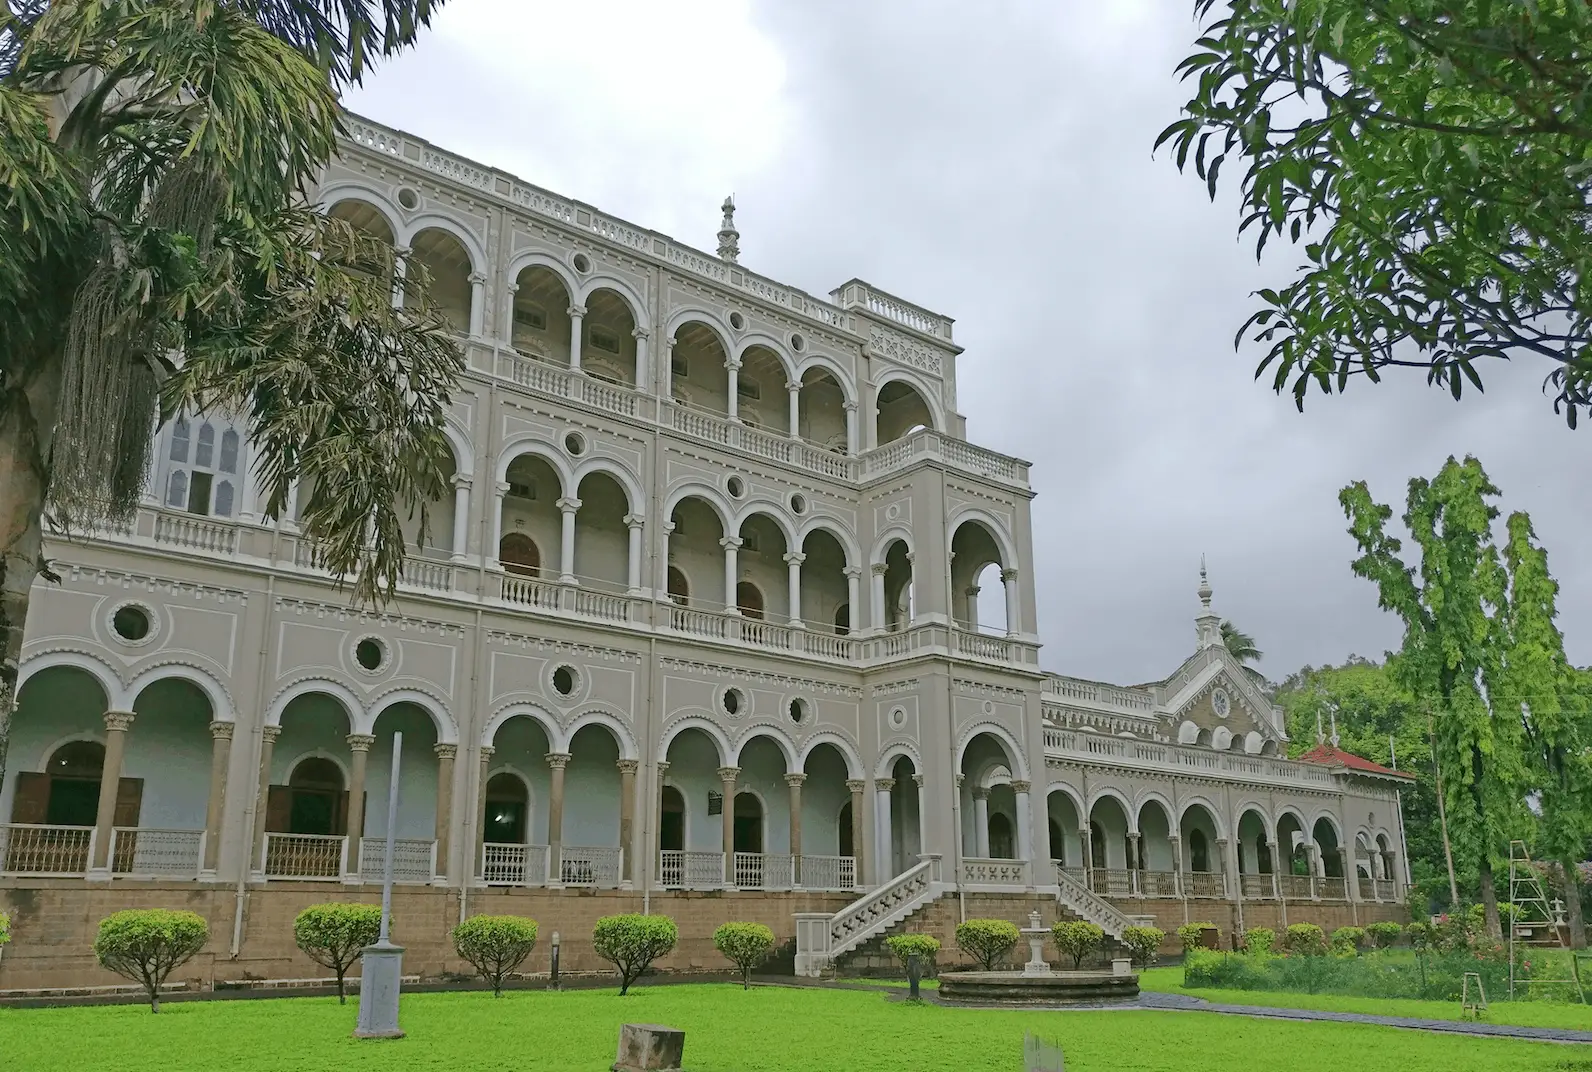 Aga Khan Palace in Pune, India